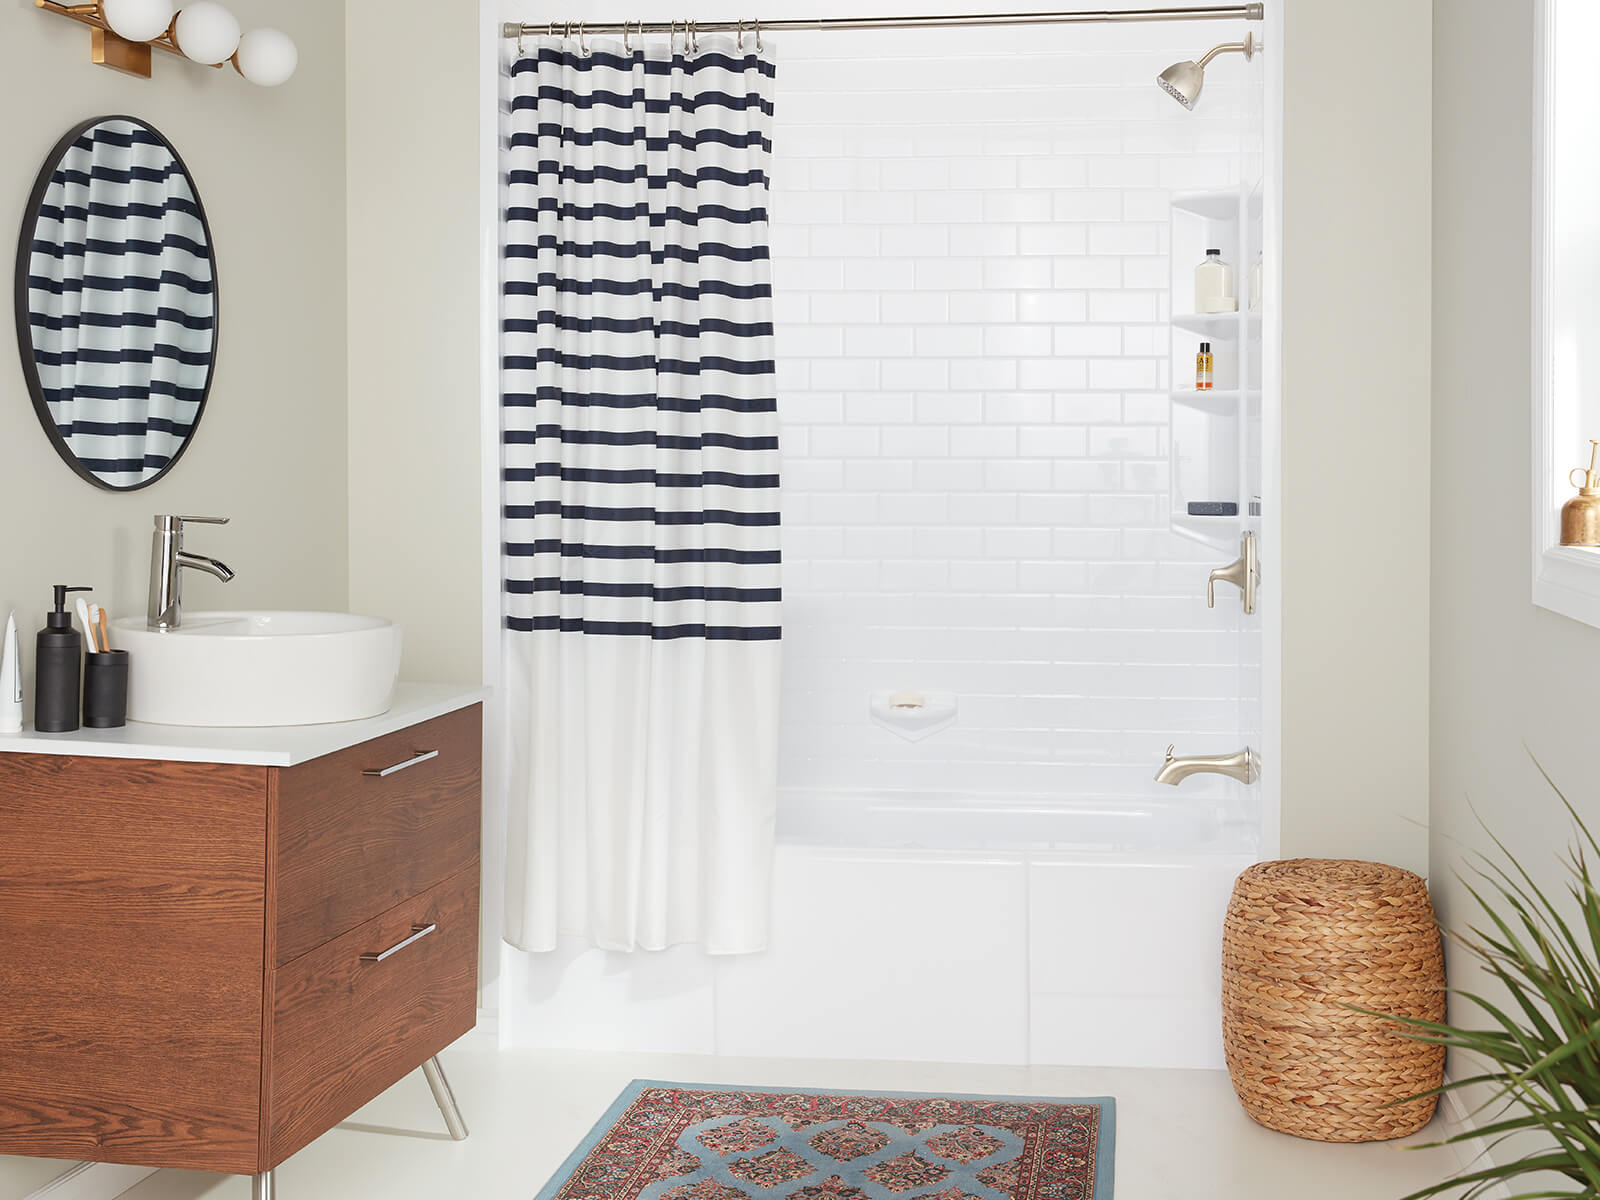 https://www.bathfitter.com/wp-content/uploads/2020/09/bathtub-modern-savona-white.jpg